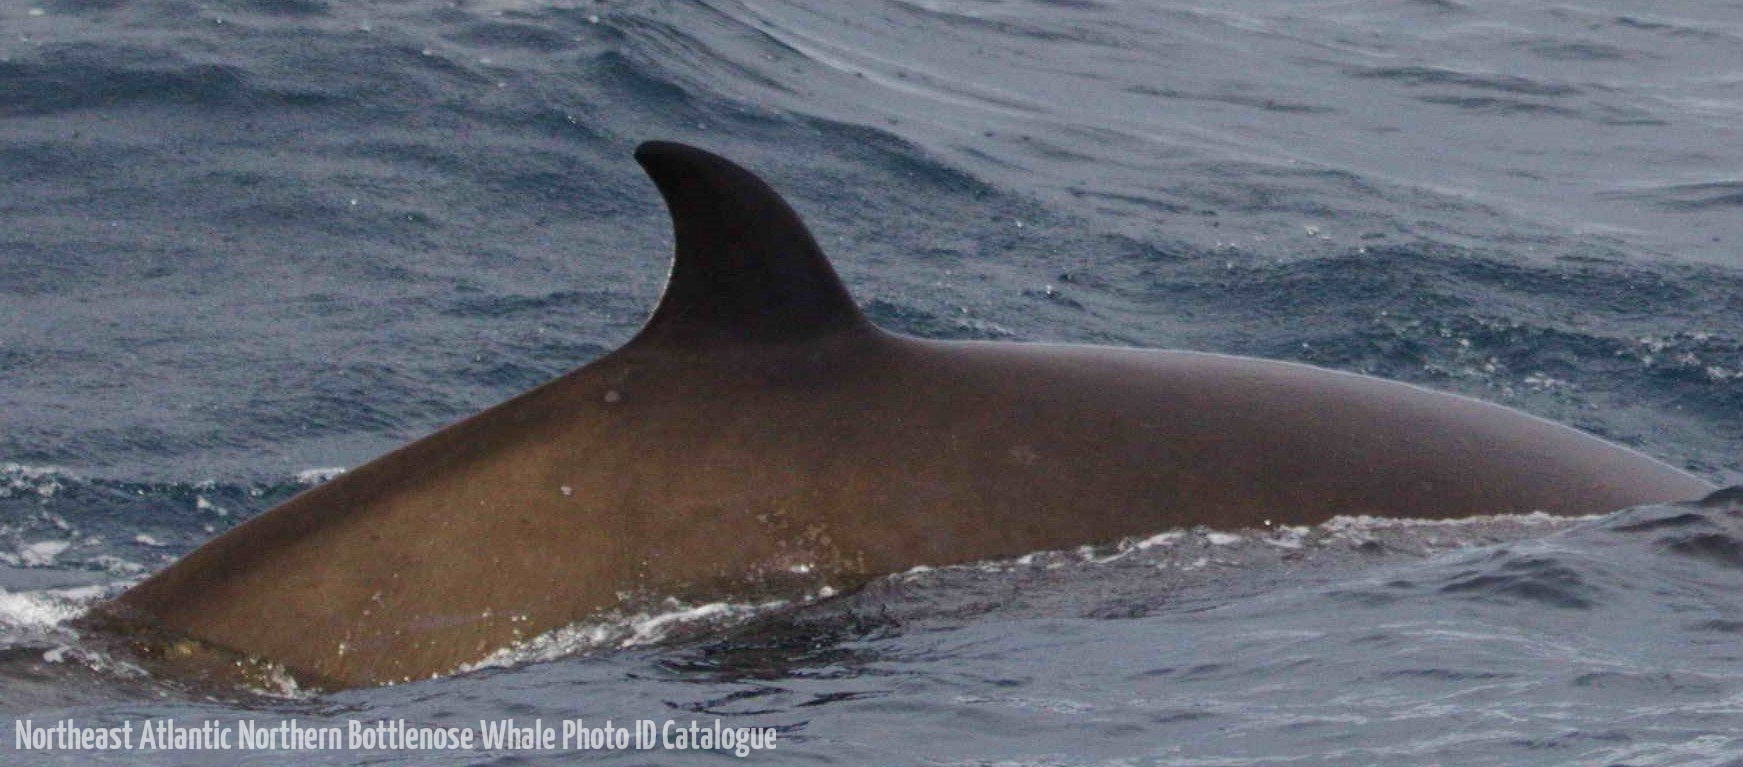 Whale ID: 0306,  Date taken: 22-06-2014,  Photographer: Lucia M. Martín López